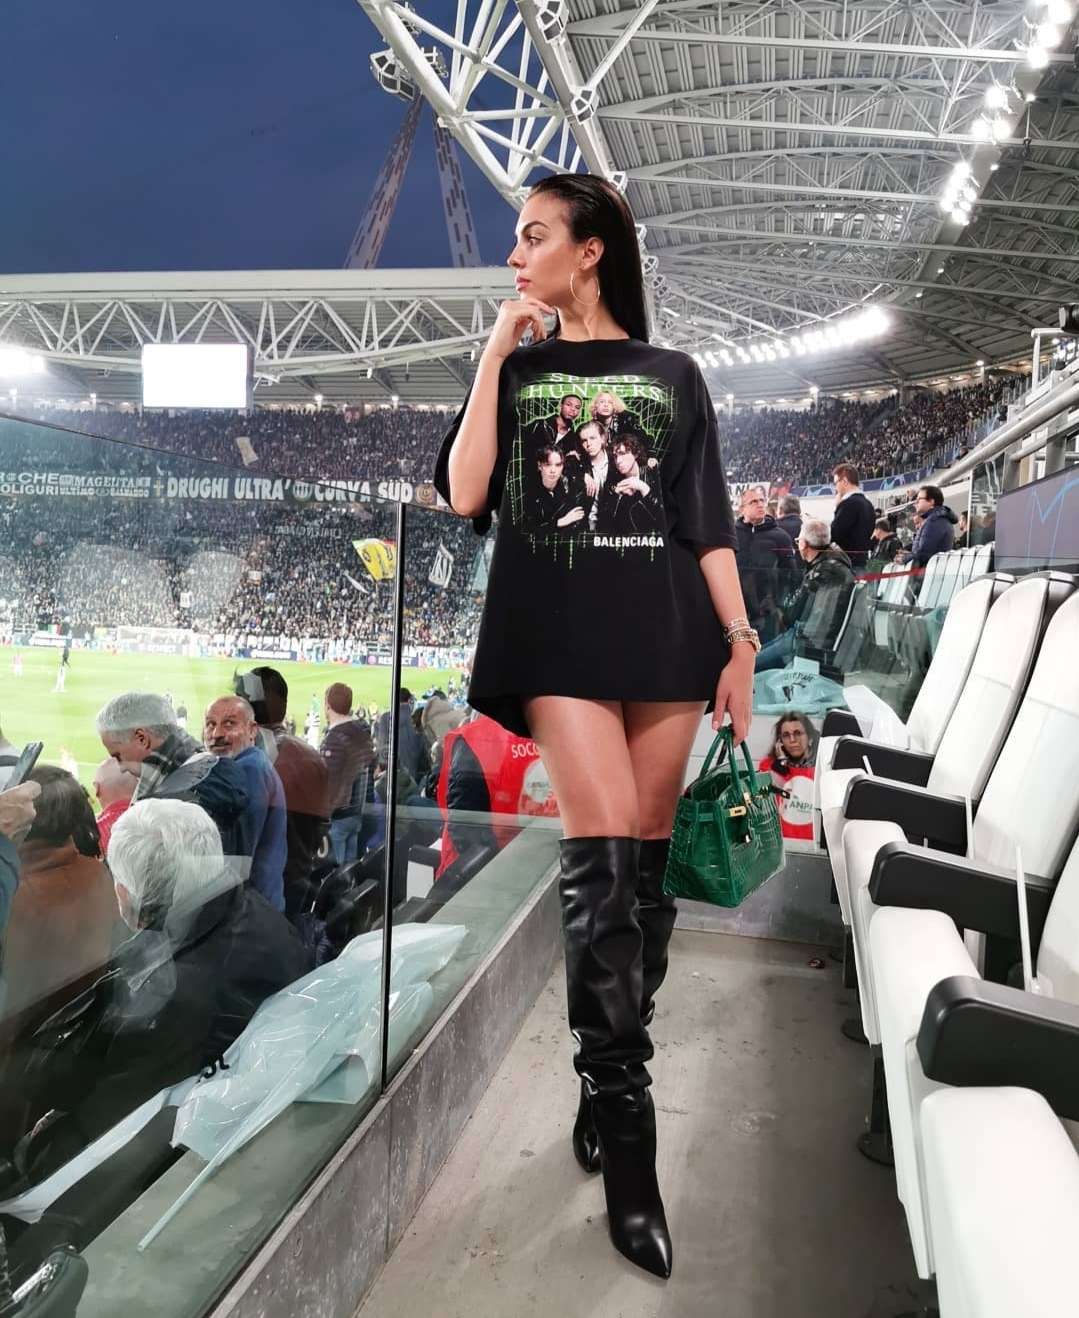 Cristiano Ronaldo's girlfriend, Georgina Rodriguez is often seen in stadiums supporting him